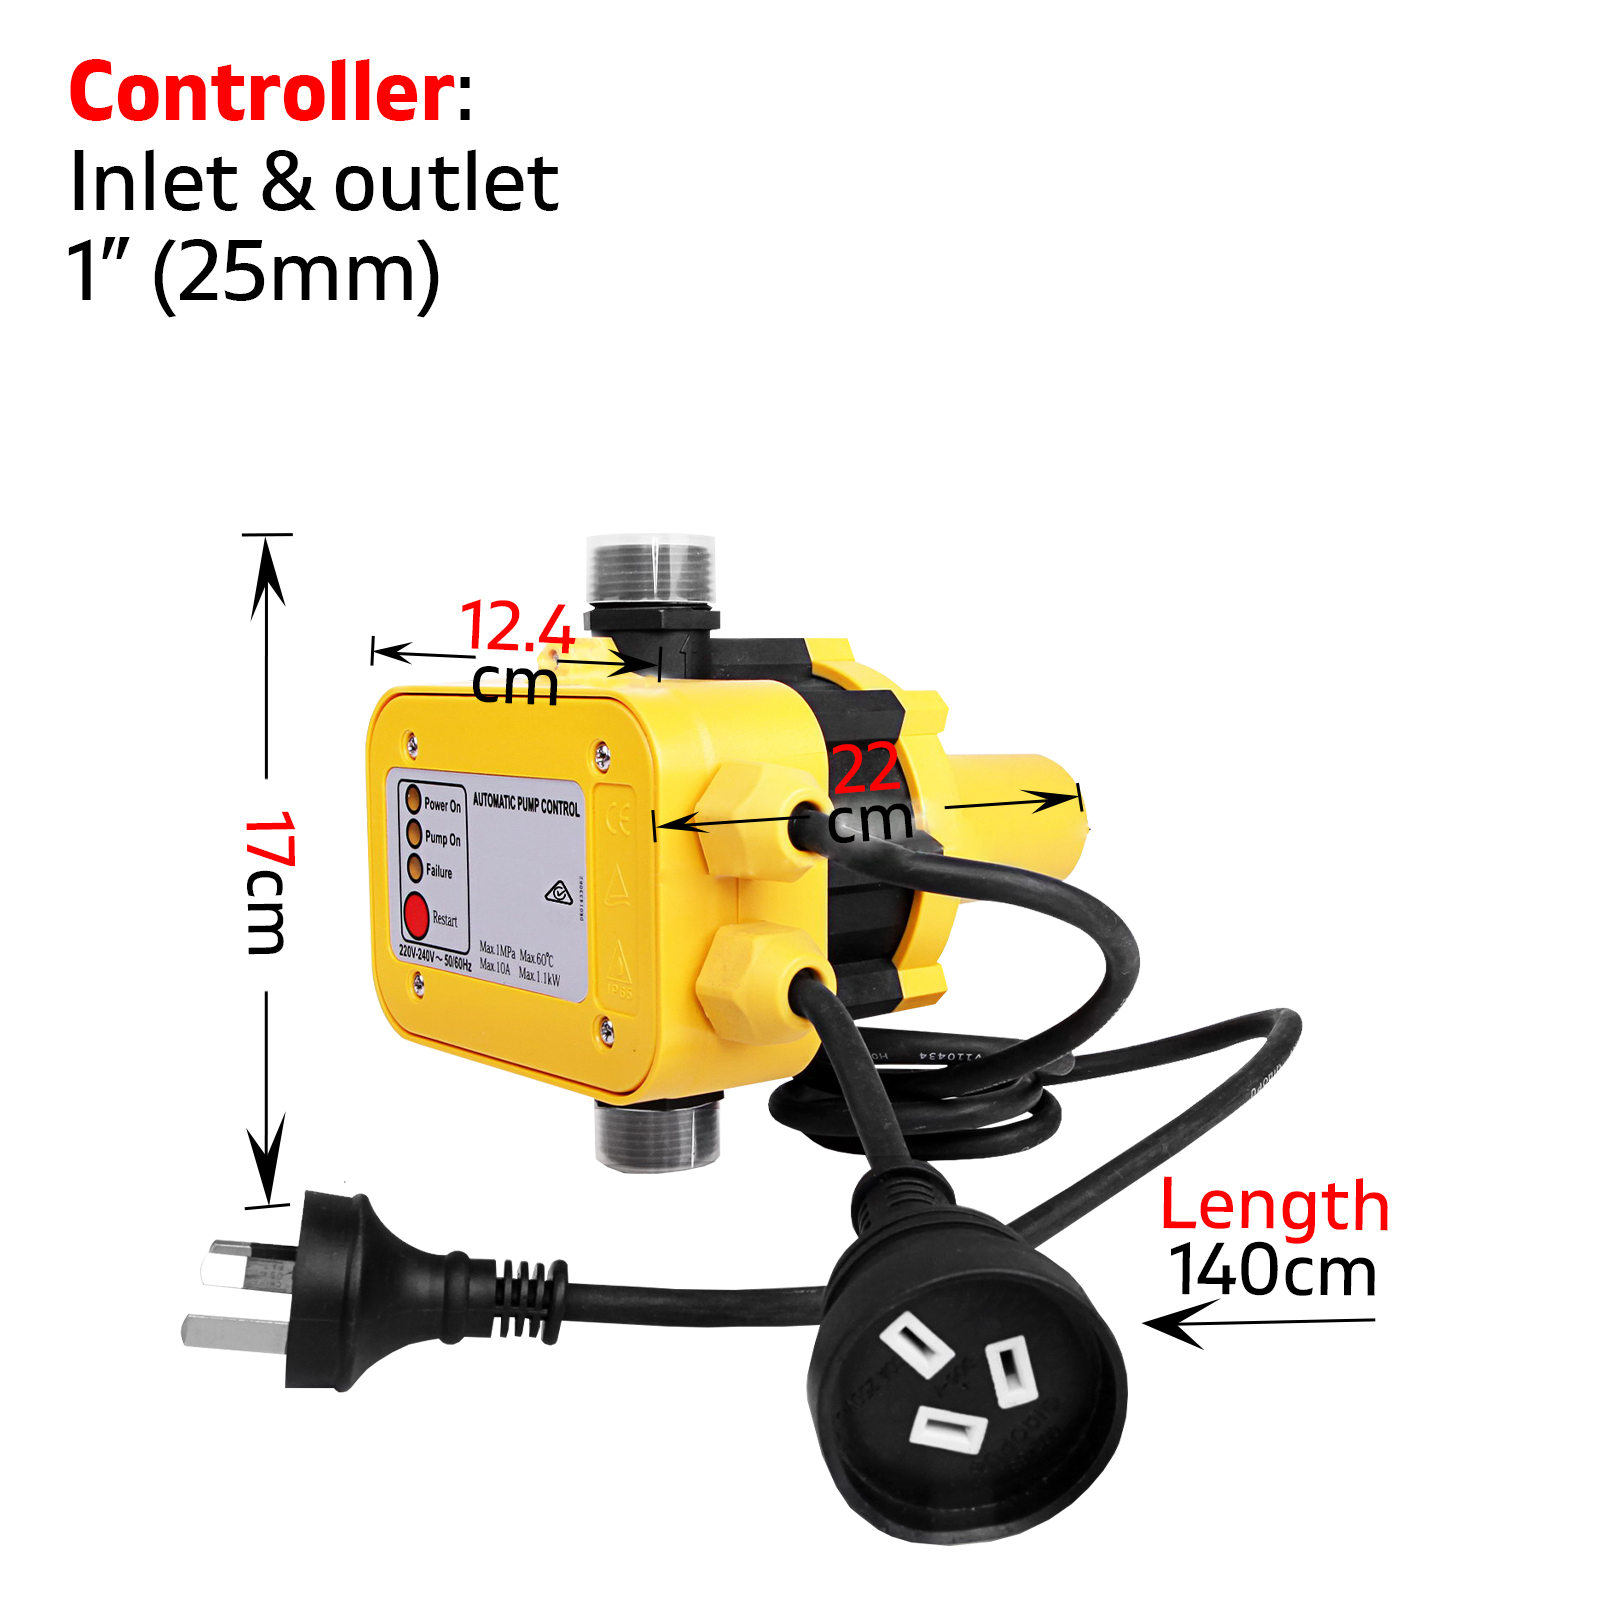 220/240V Automatic Electronic Water Pump Controller Garden Farm Home - Yellow